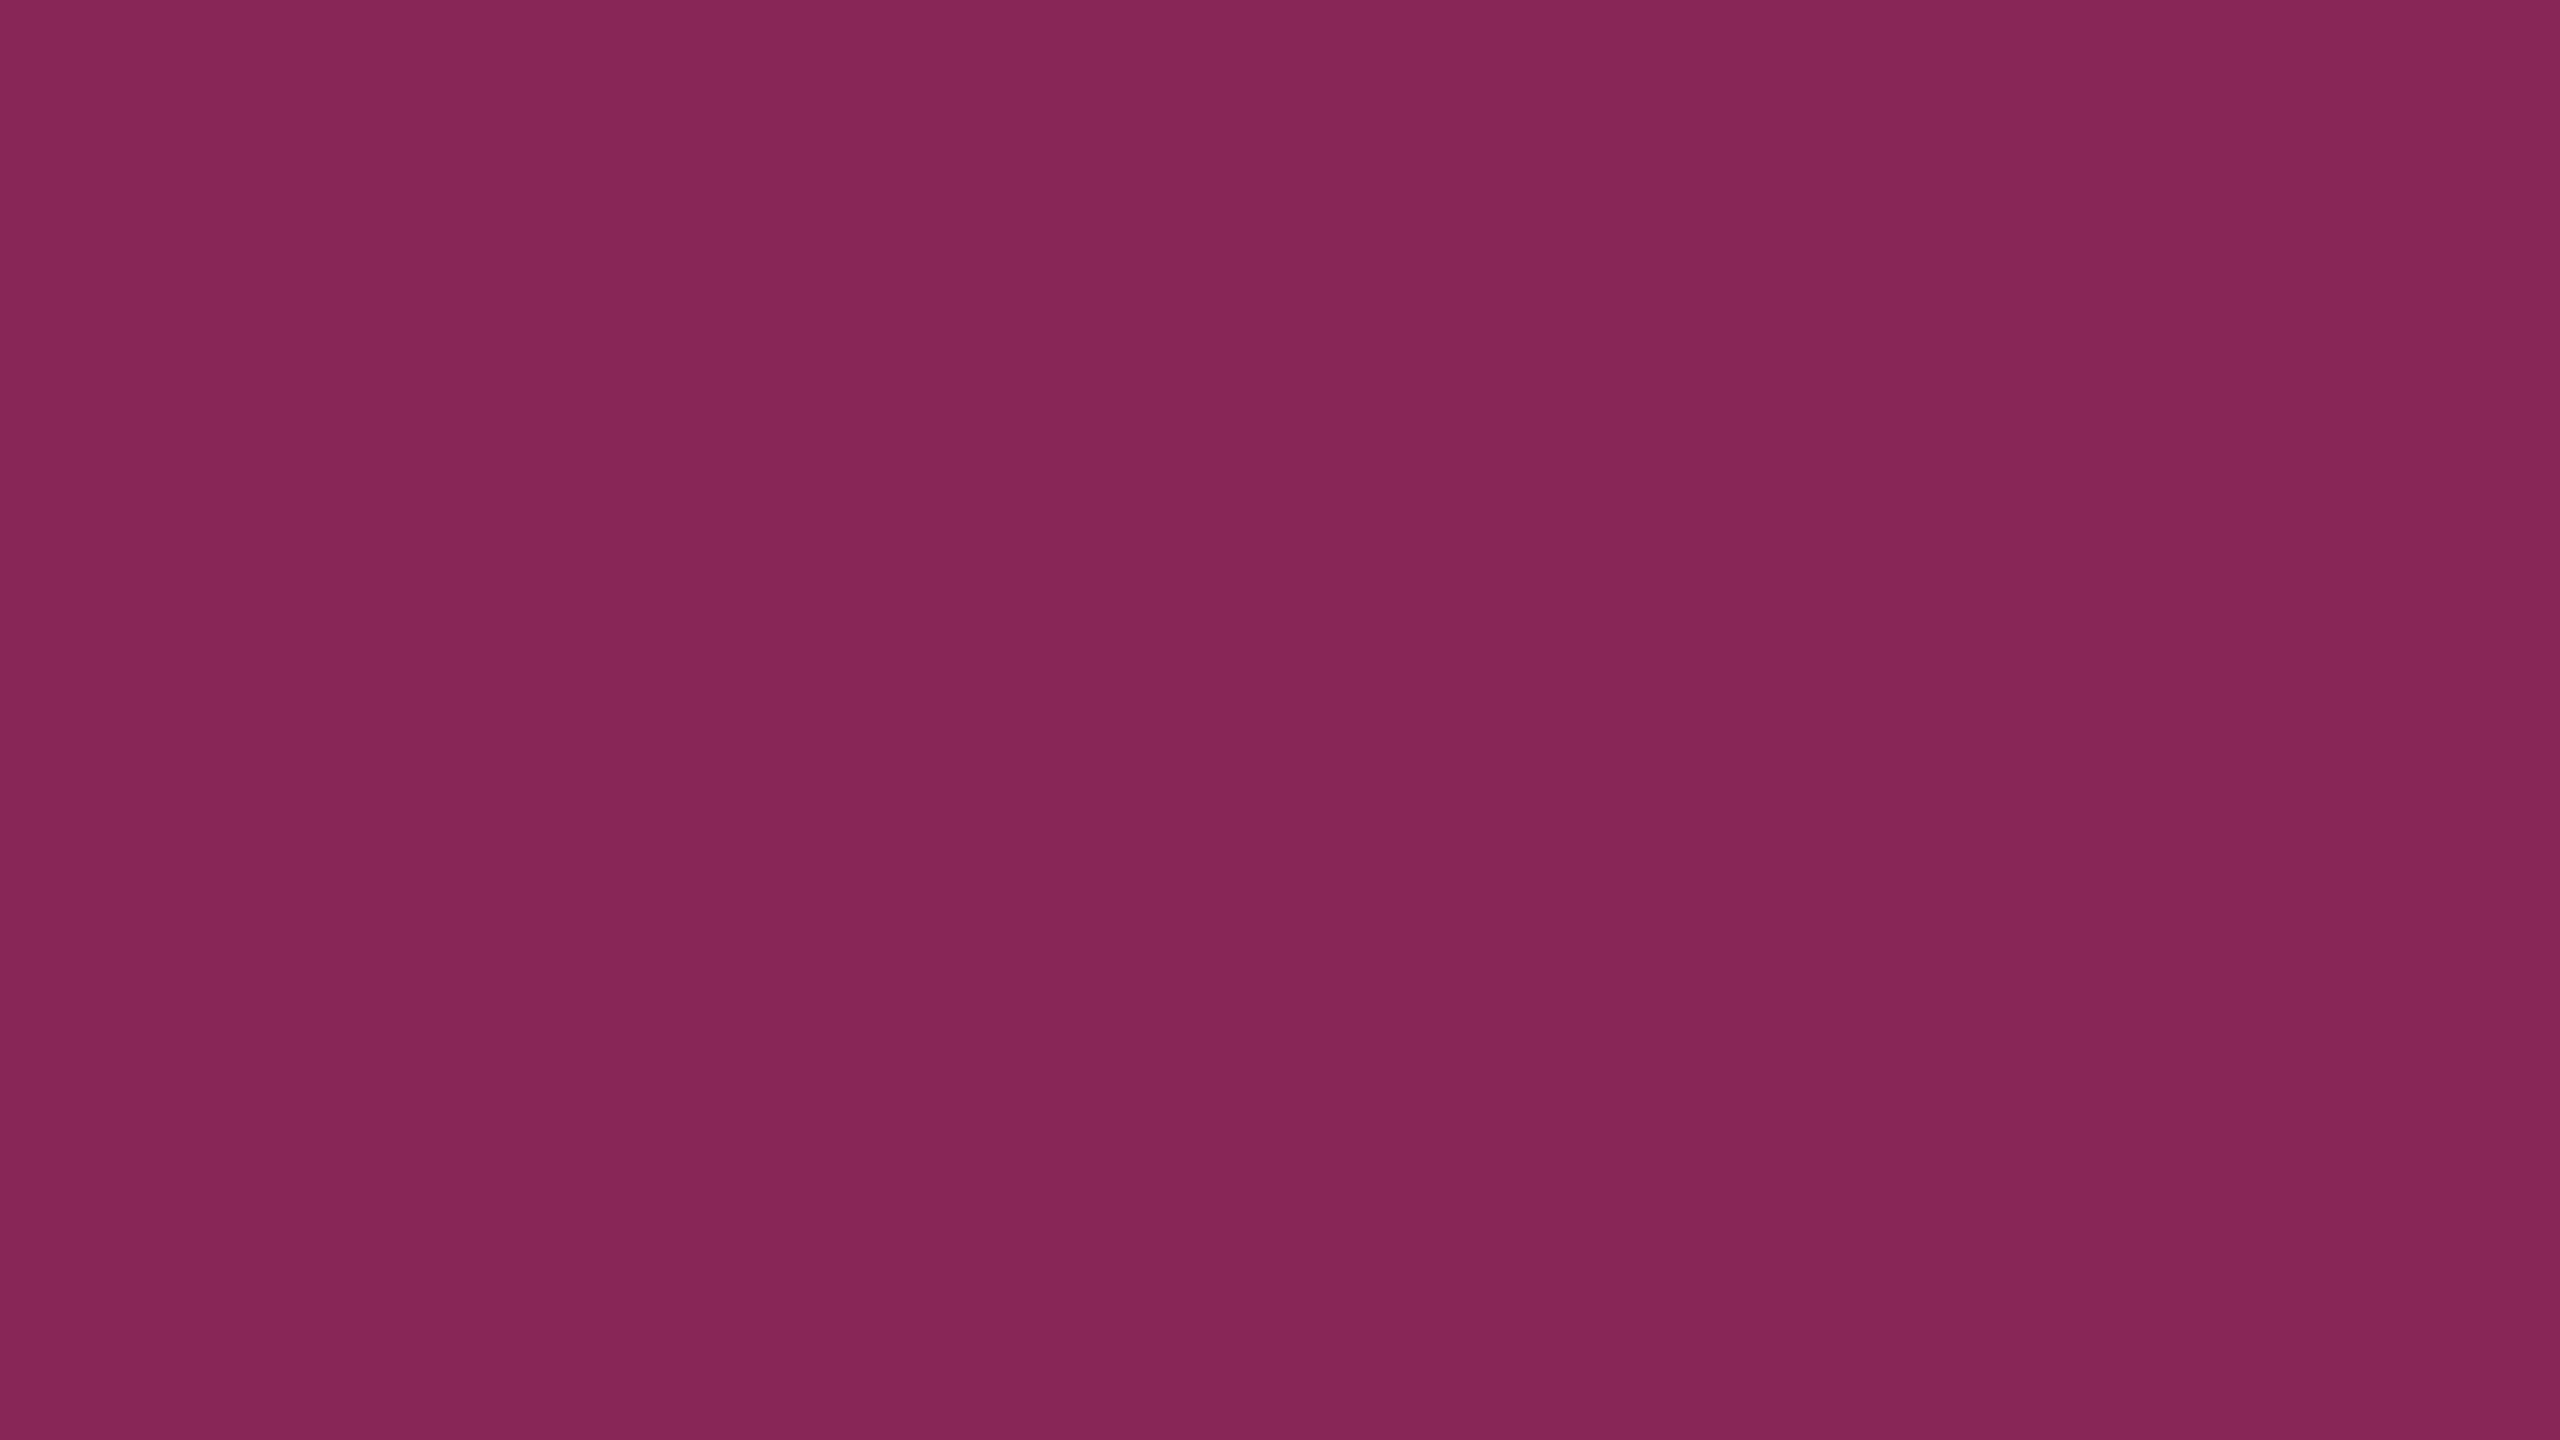 2560x1440 Dark Raspberry Solid Color Background